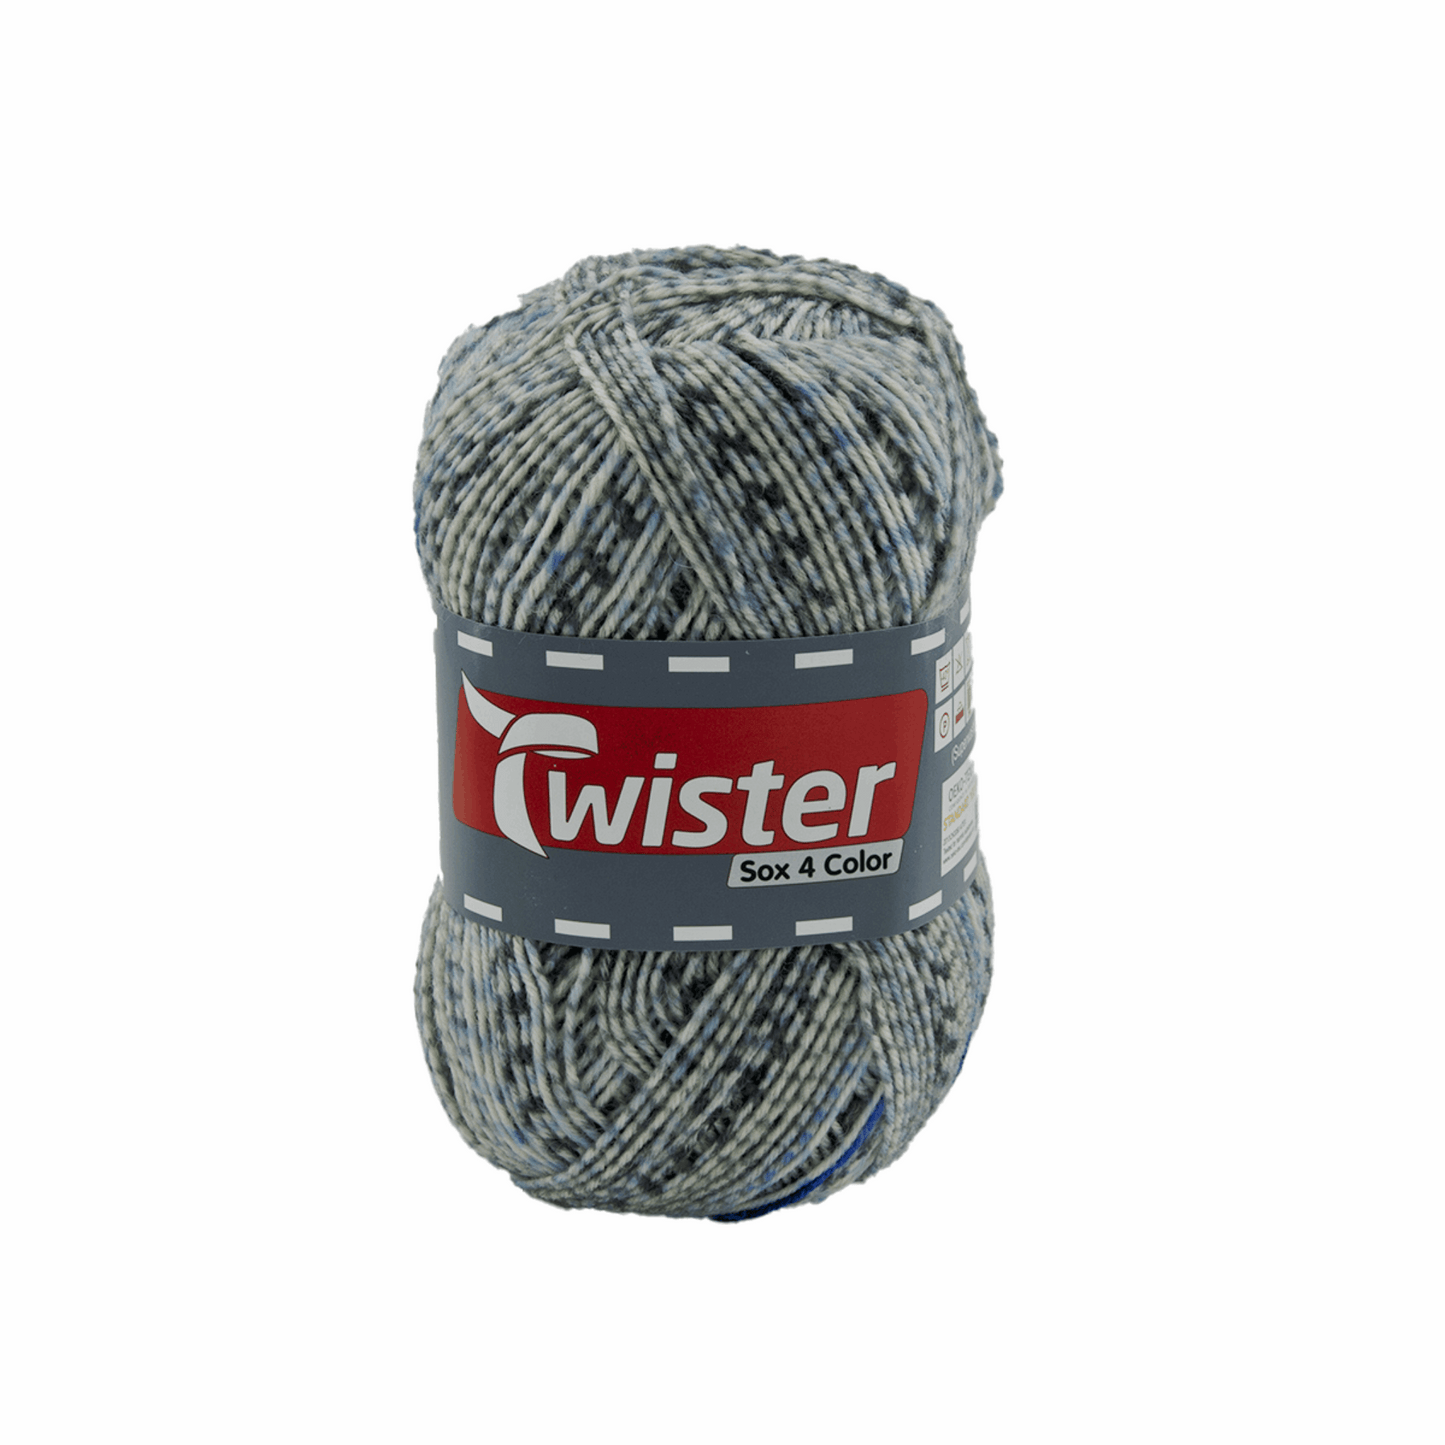 Twister Sox4 Color superwash, blau pertol, 98306, Farbe 822